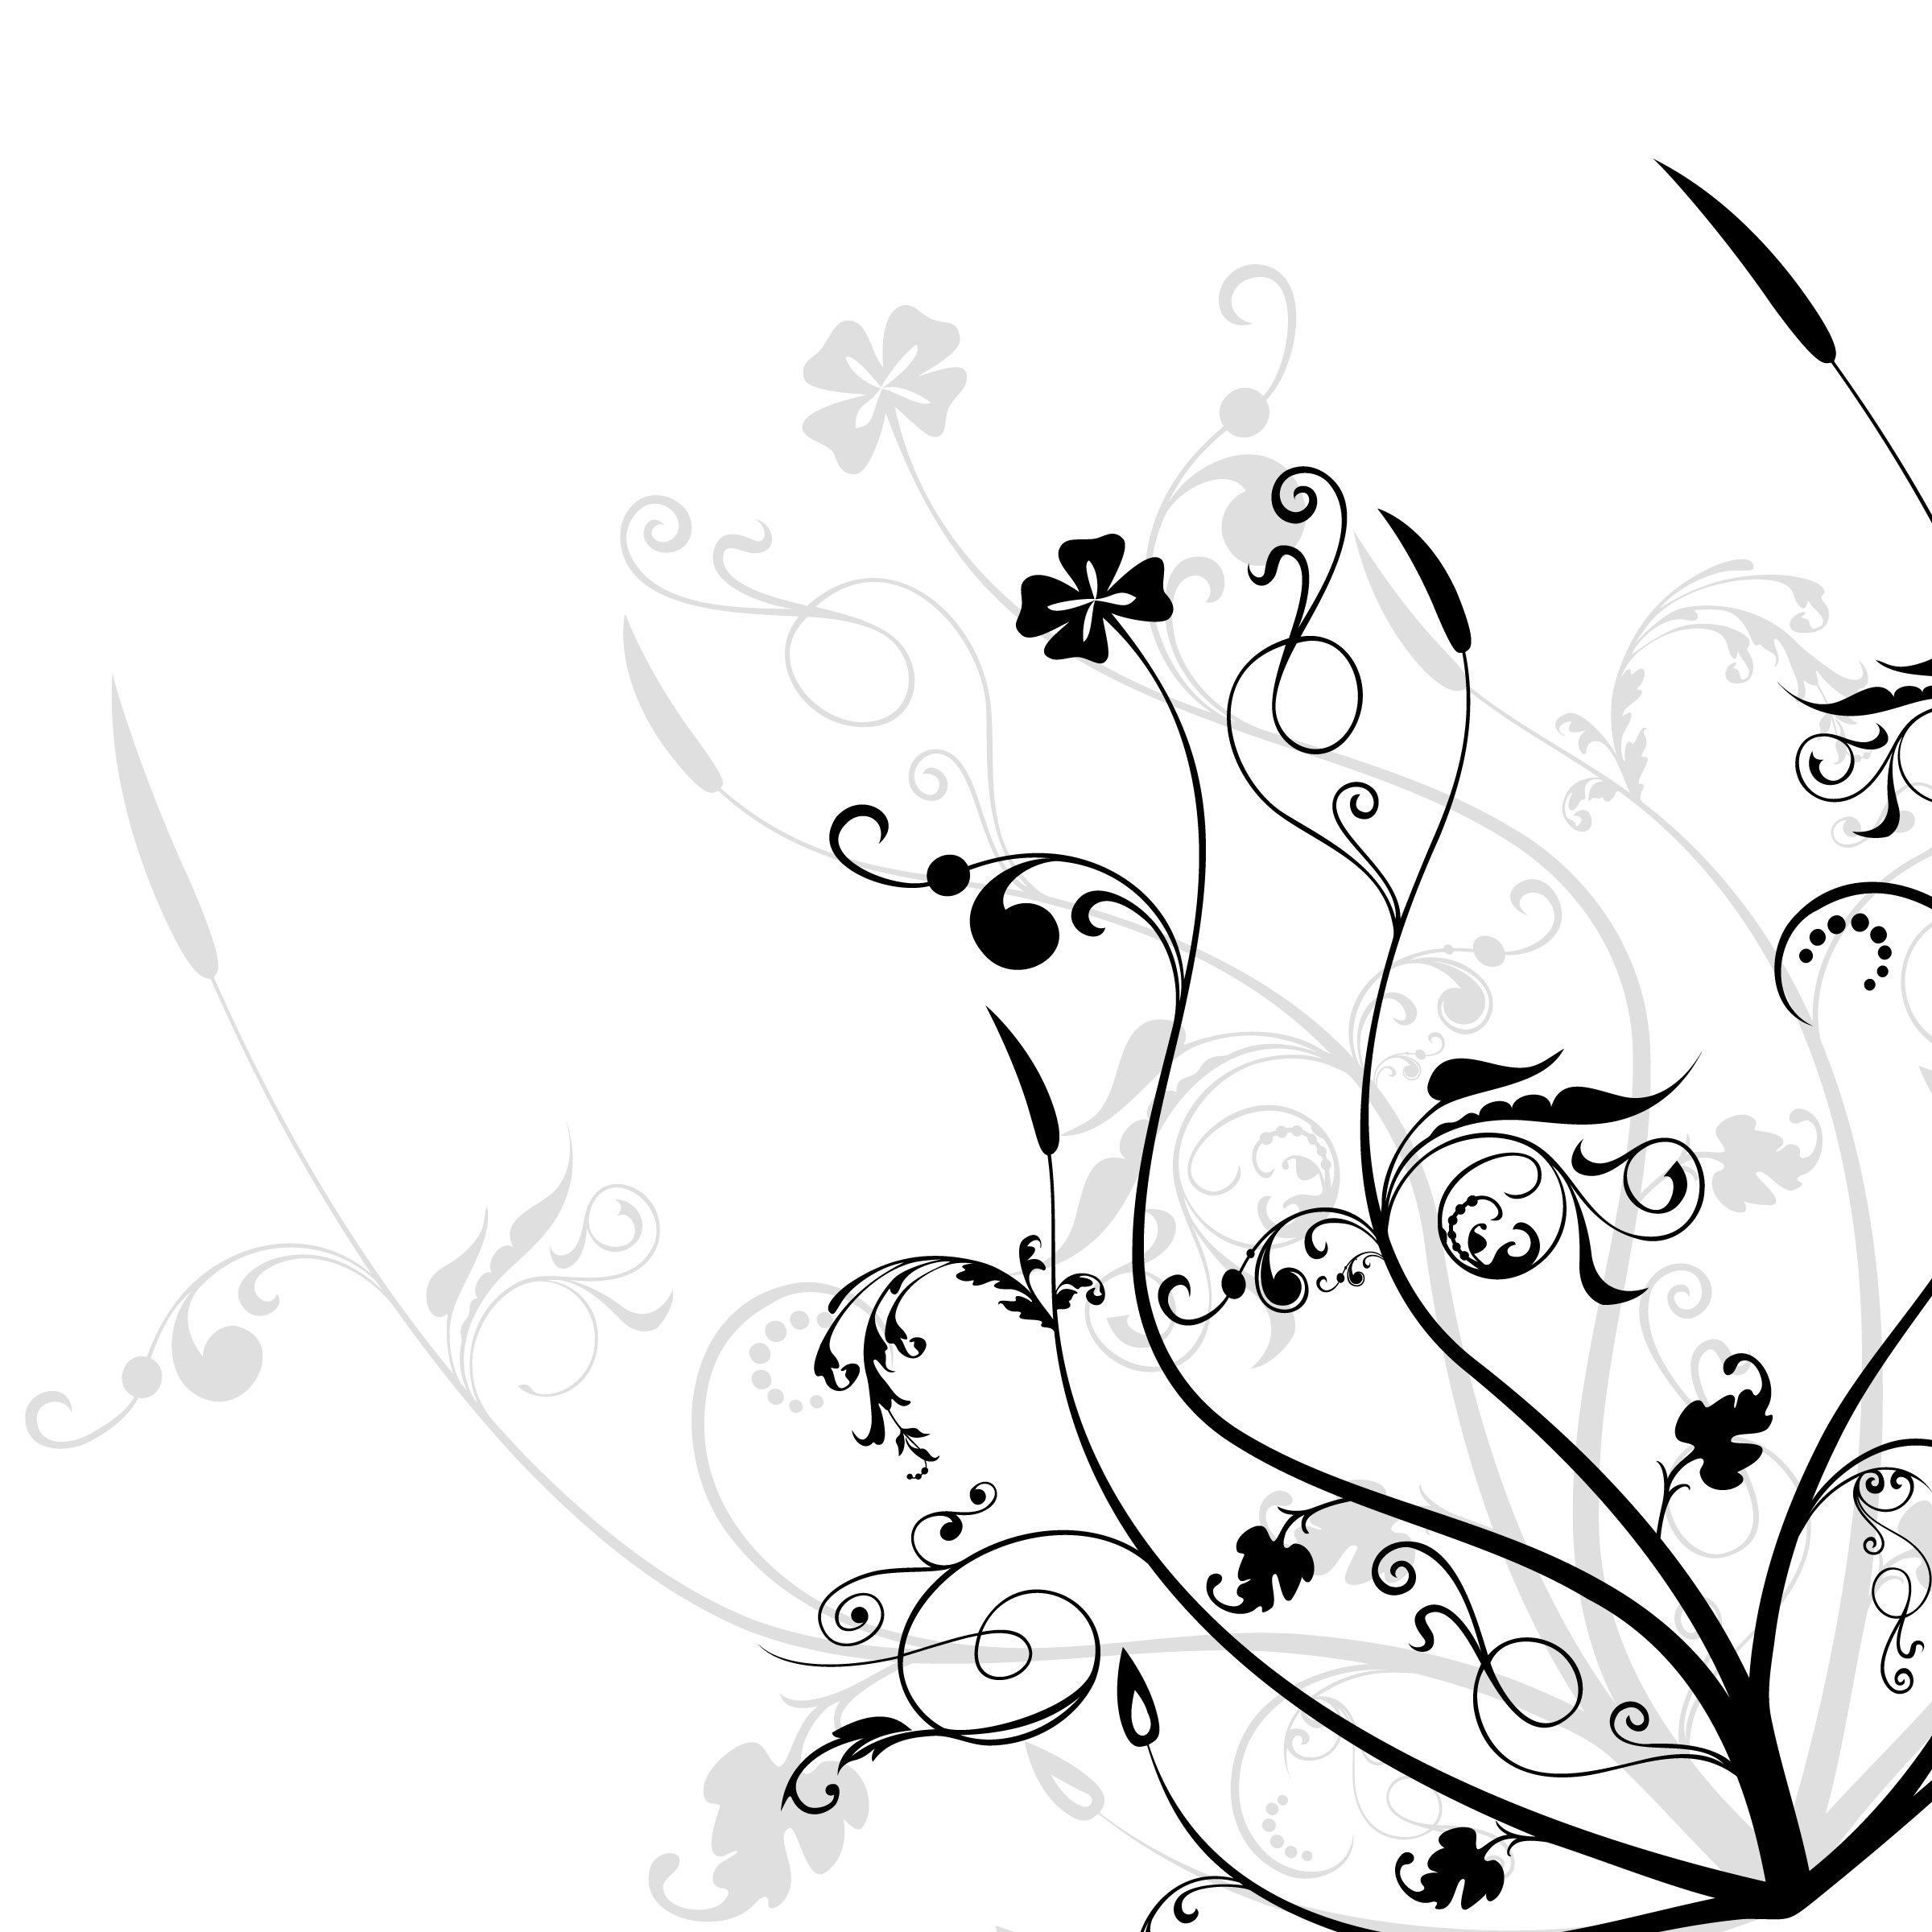 flowerdesignblackwhite.jpg